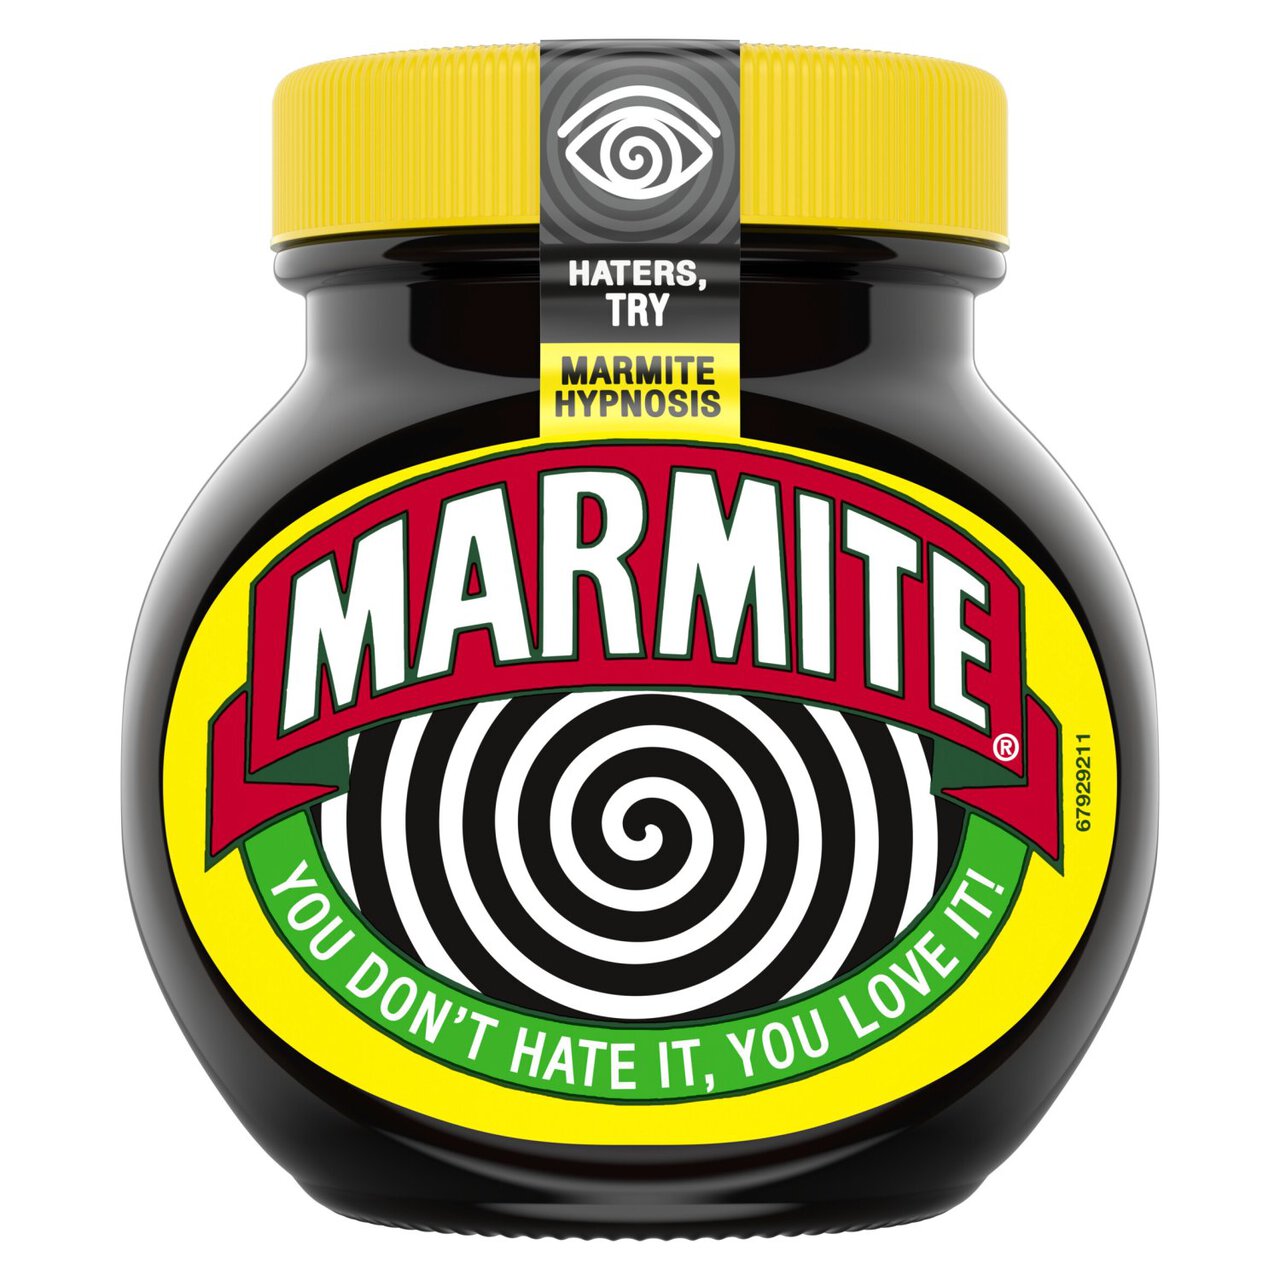 Marmite Original Yeast Extract Spread 250g